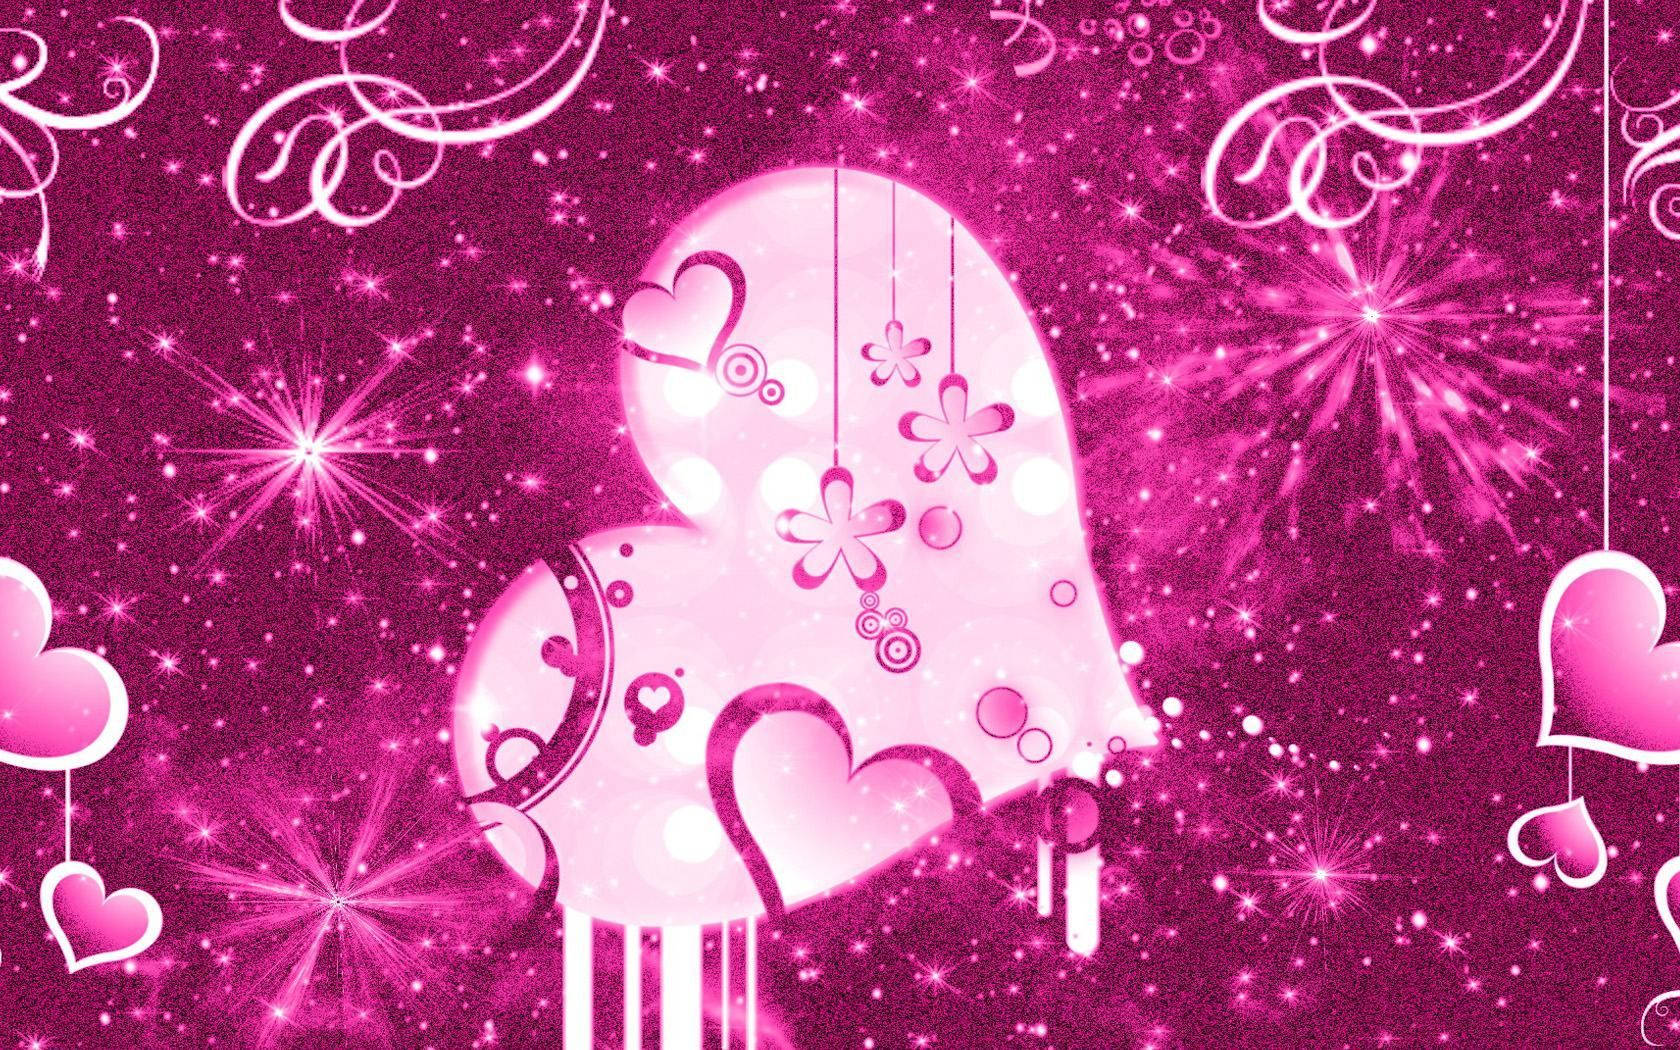 Spread Love With Girly Purple Glitter Hearts